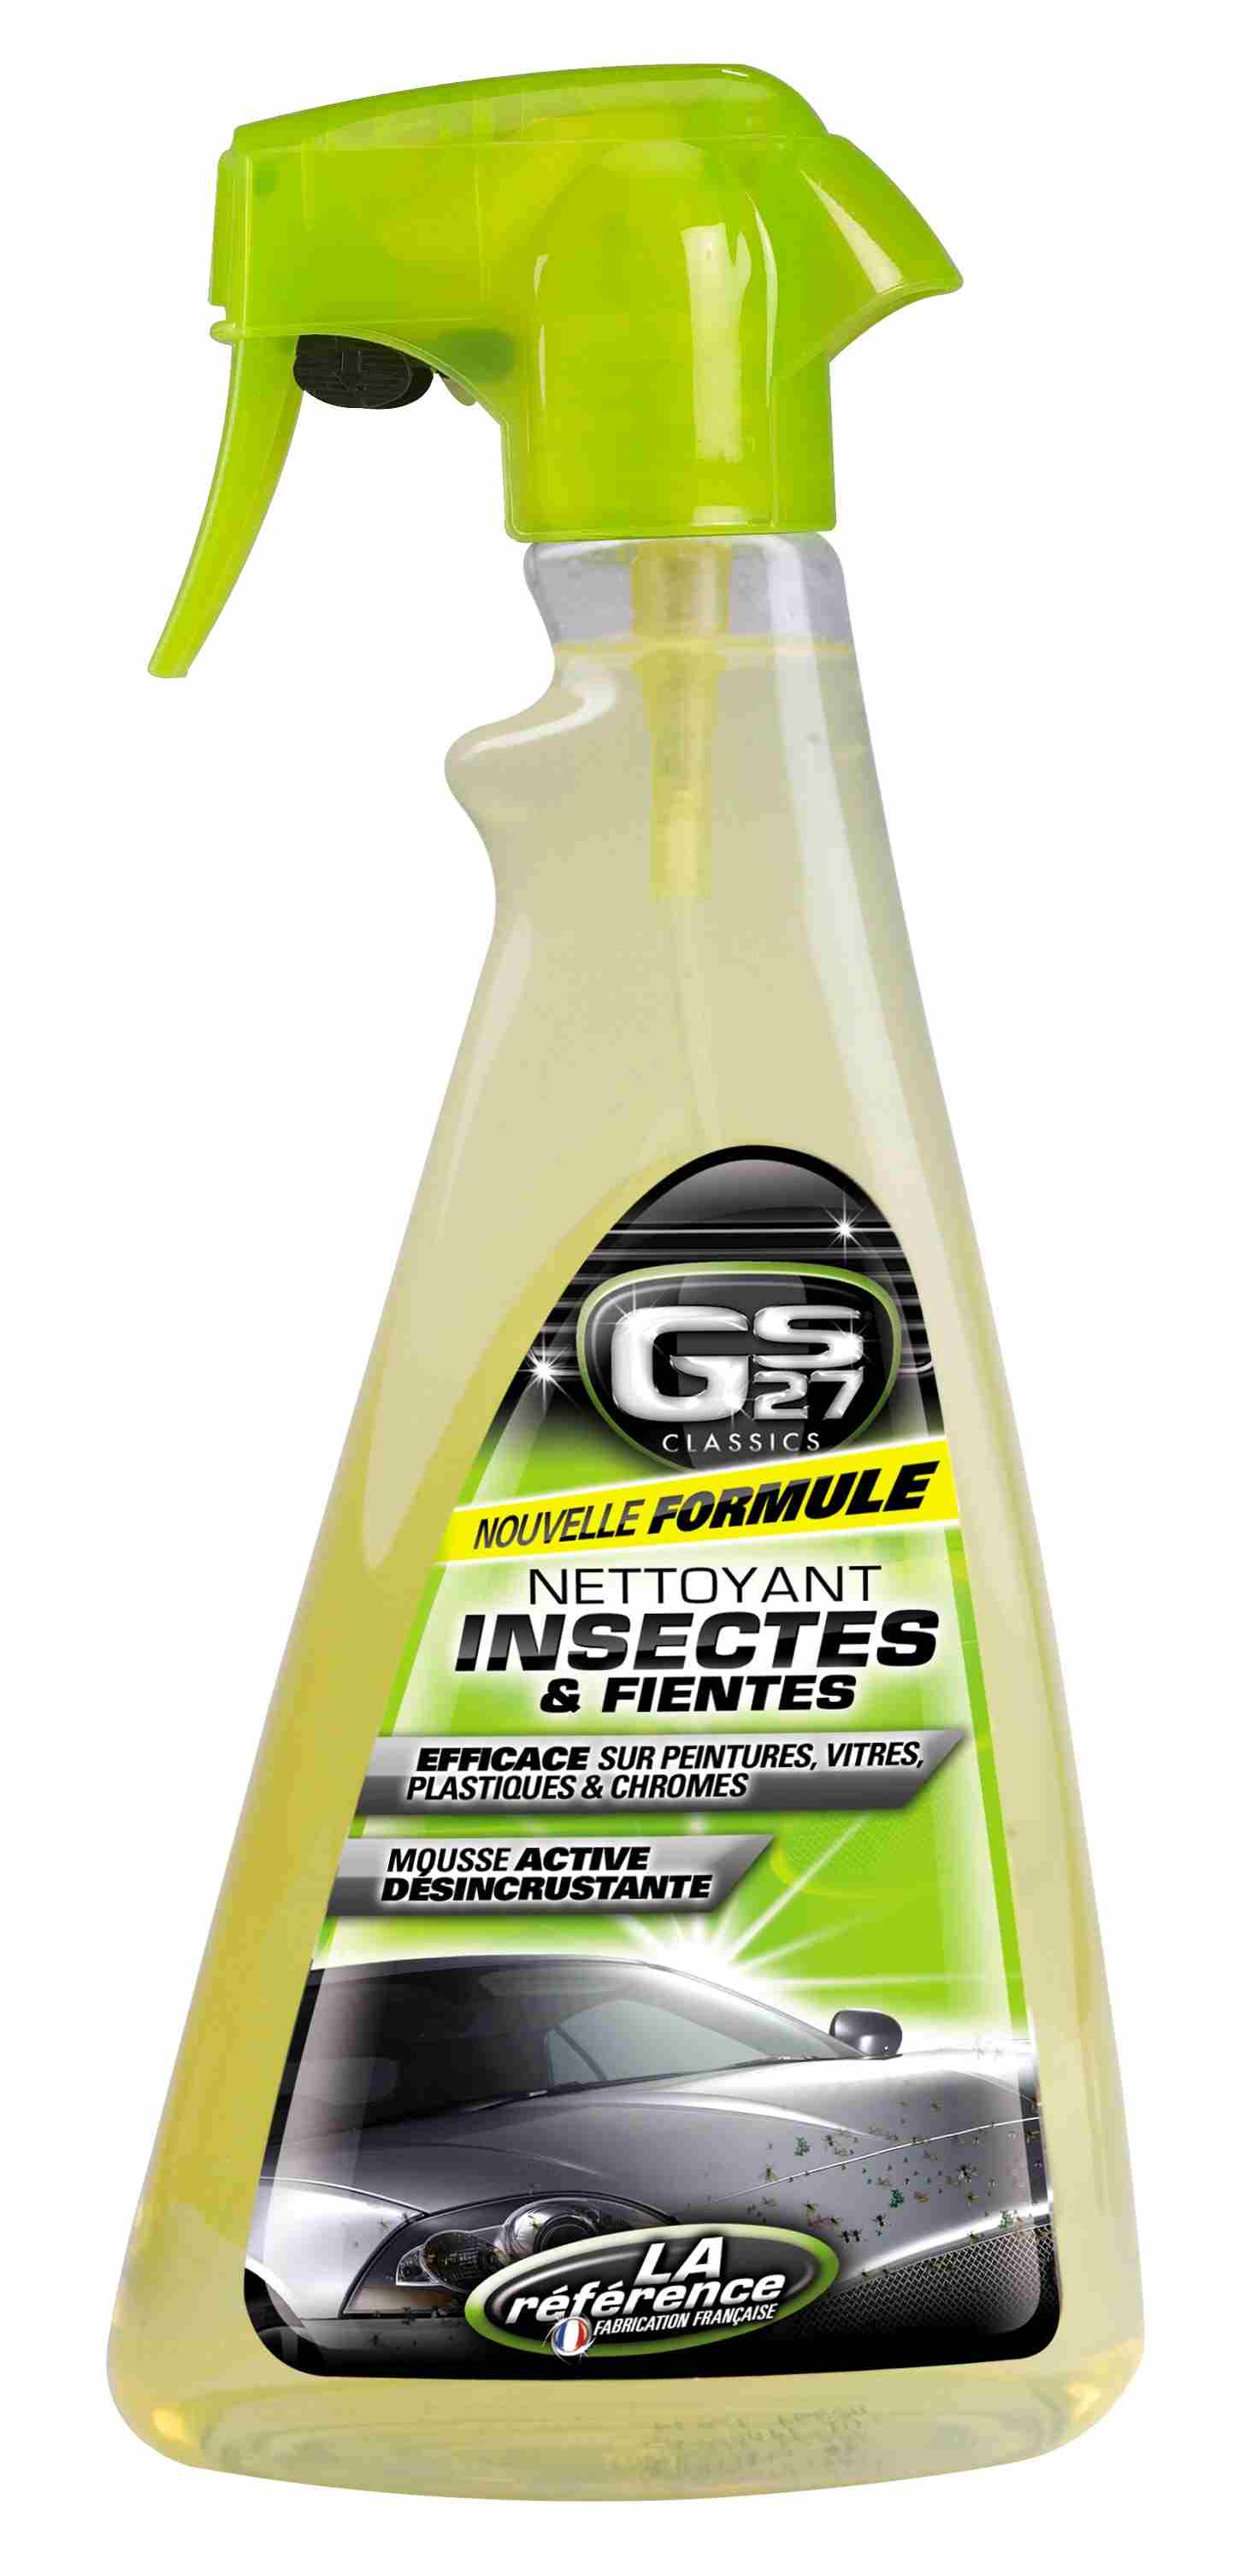 CLASSICS Nettoyant Insectes & Fientes 500 ml